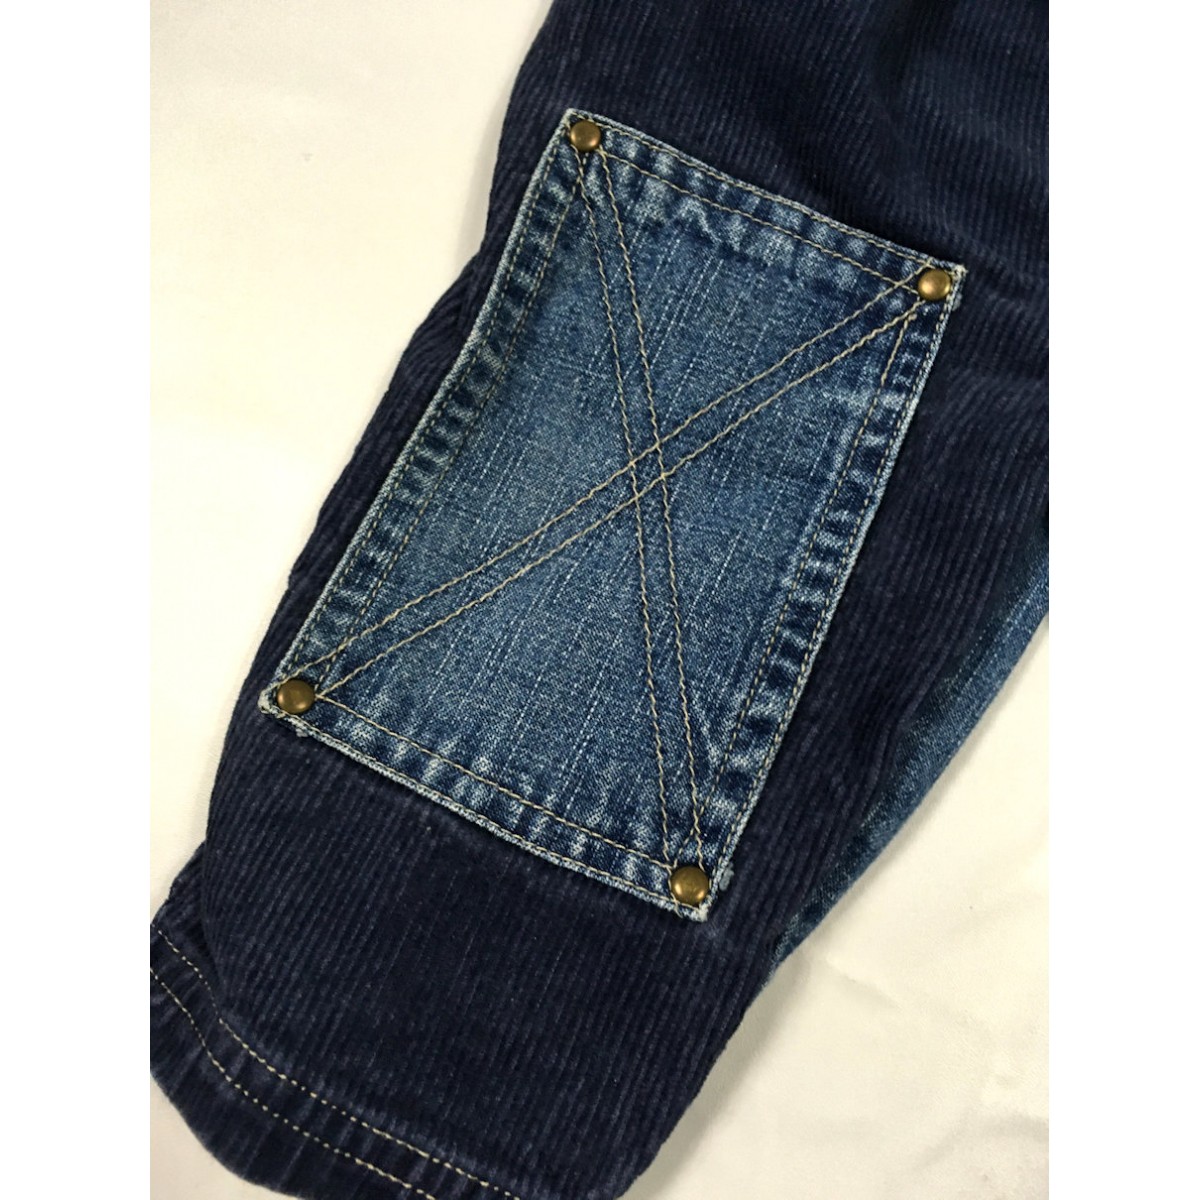 jeans patch / 12 mois